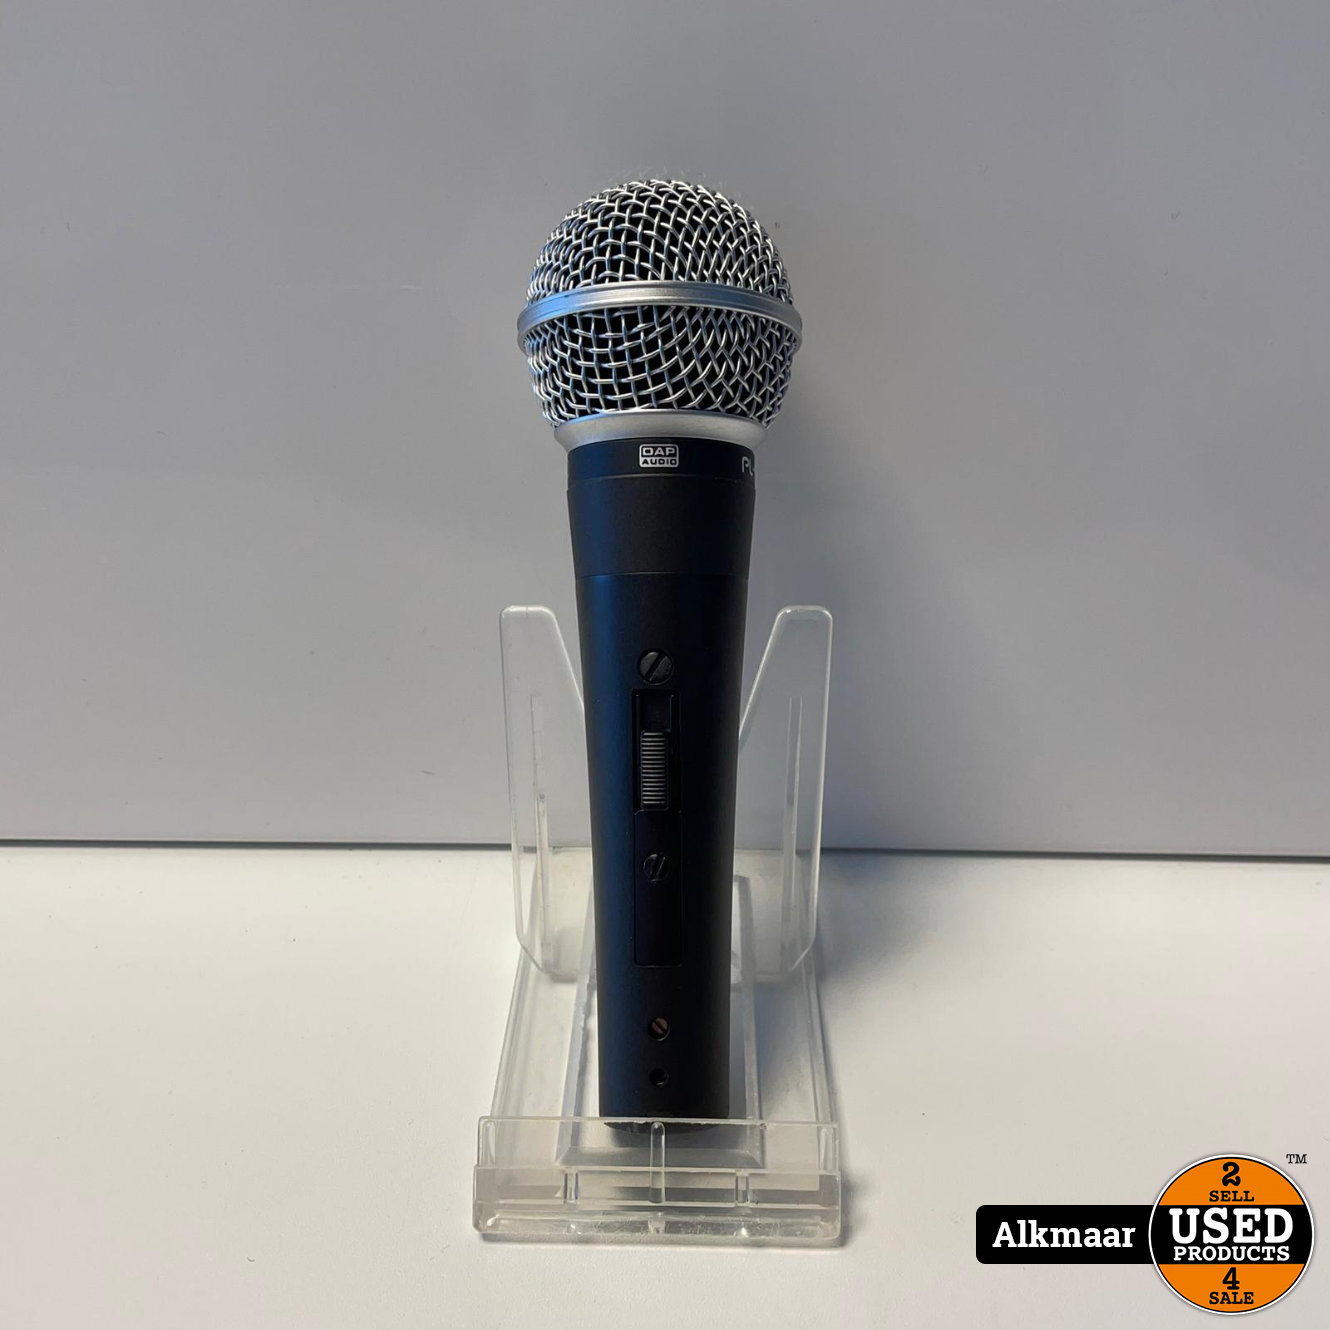 DAP dynamische microfoon in staat - Used Products Alkmaar